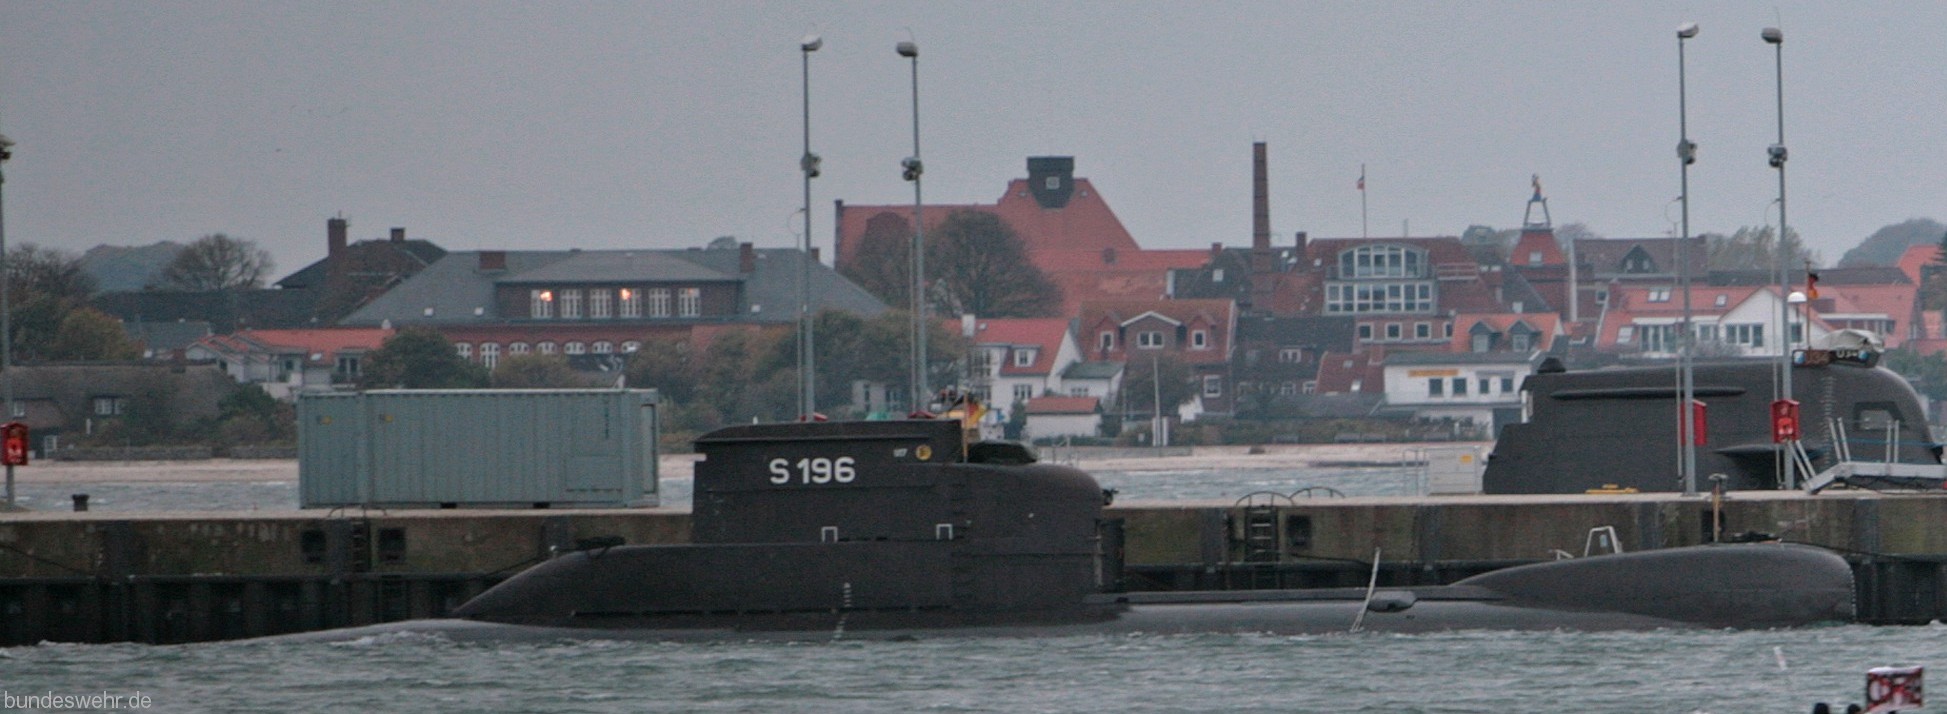 s-196 fgs u17 type 206 class submarine german navy 06